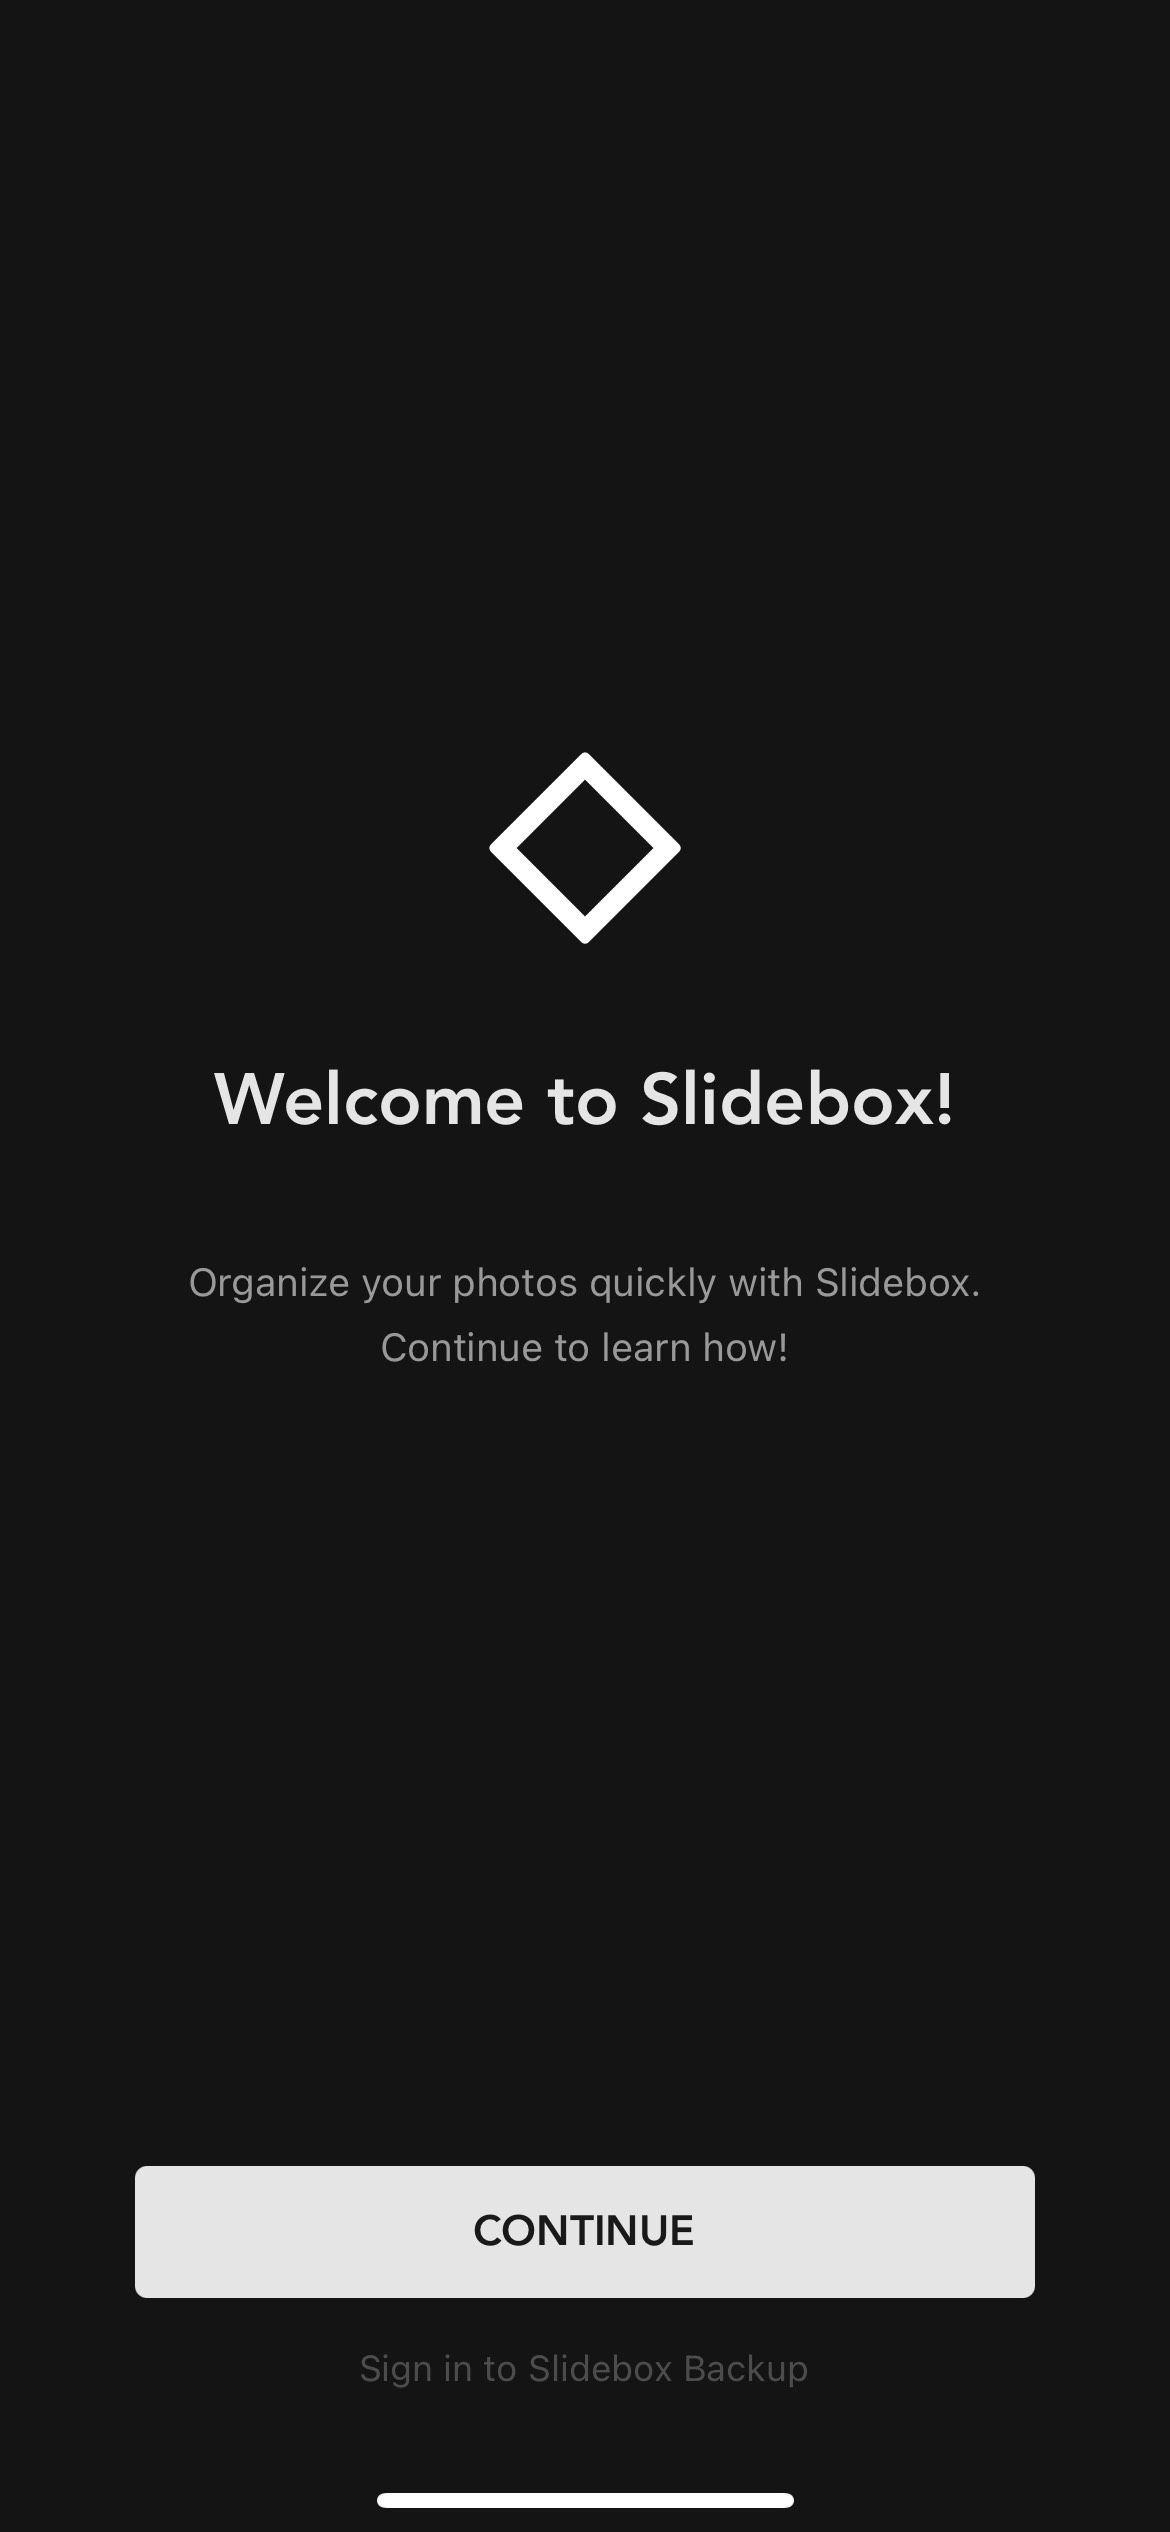 Slidebox welcome screen